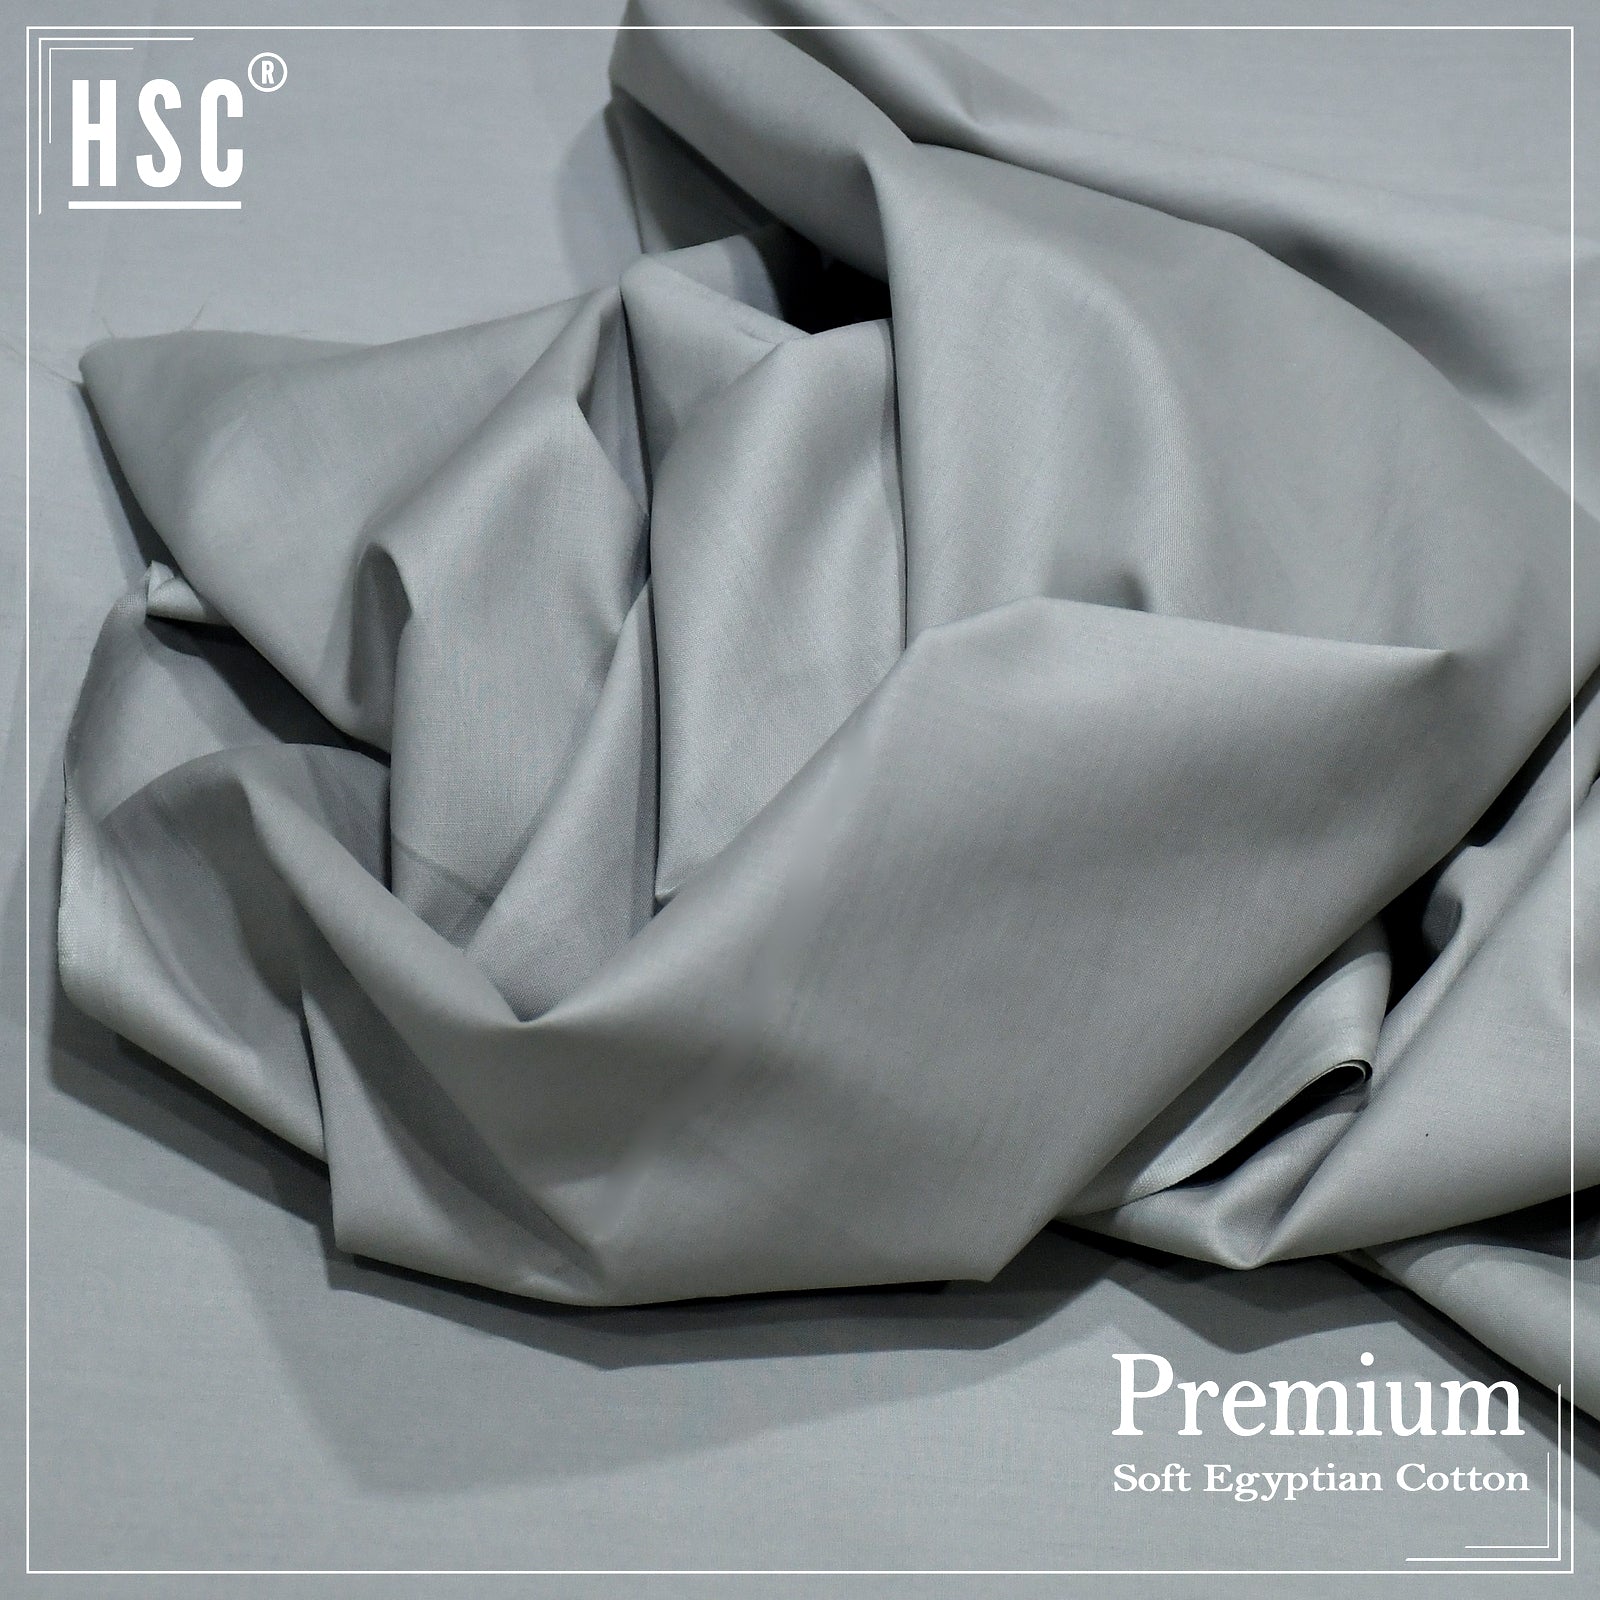 Premium Soft Egyptian Cotton - SCT2 HSC